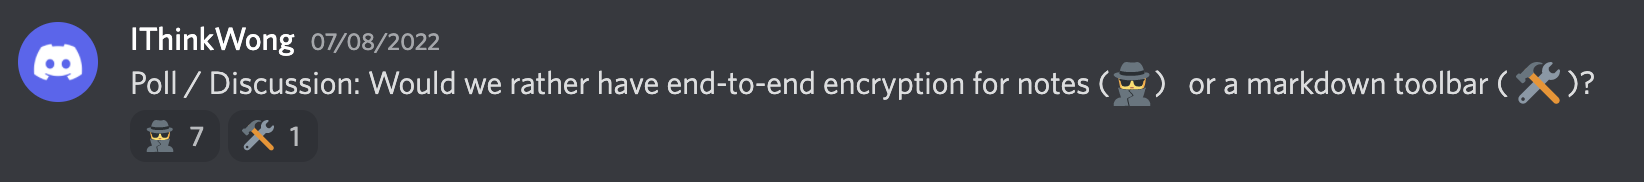 end-to-end encryption discord poll